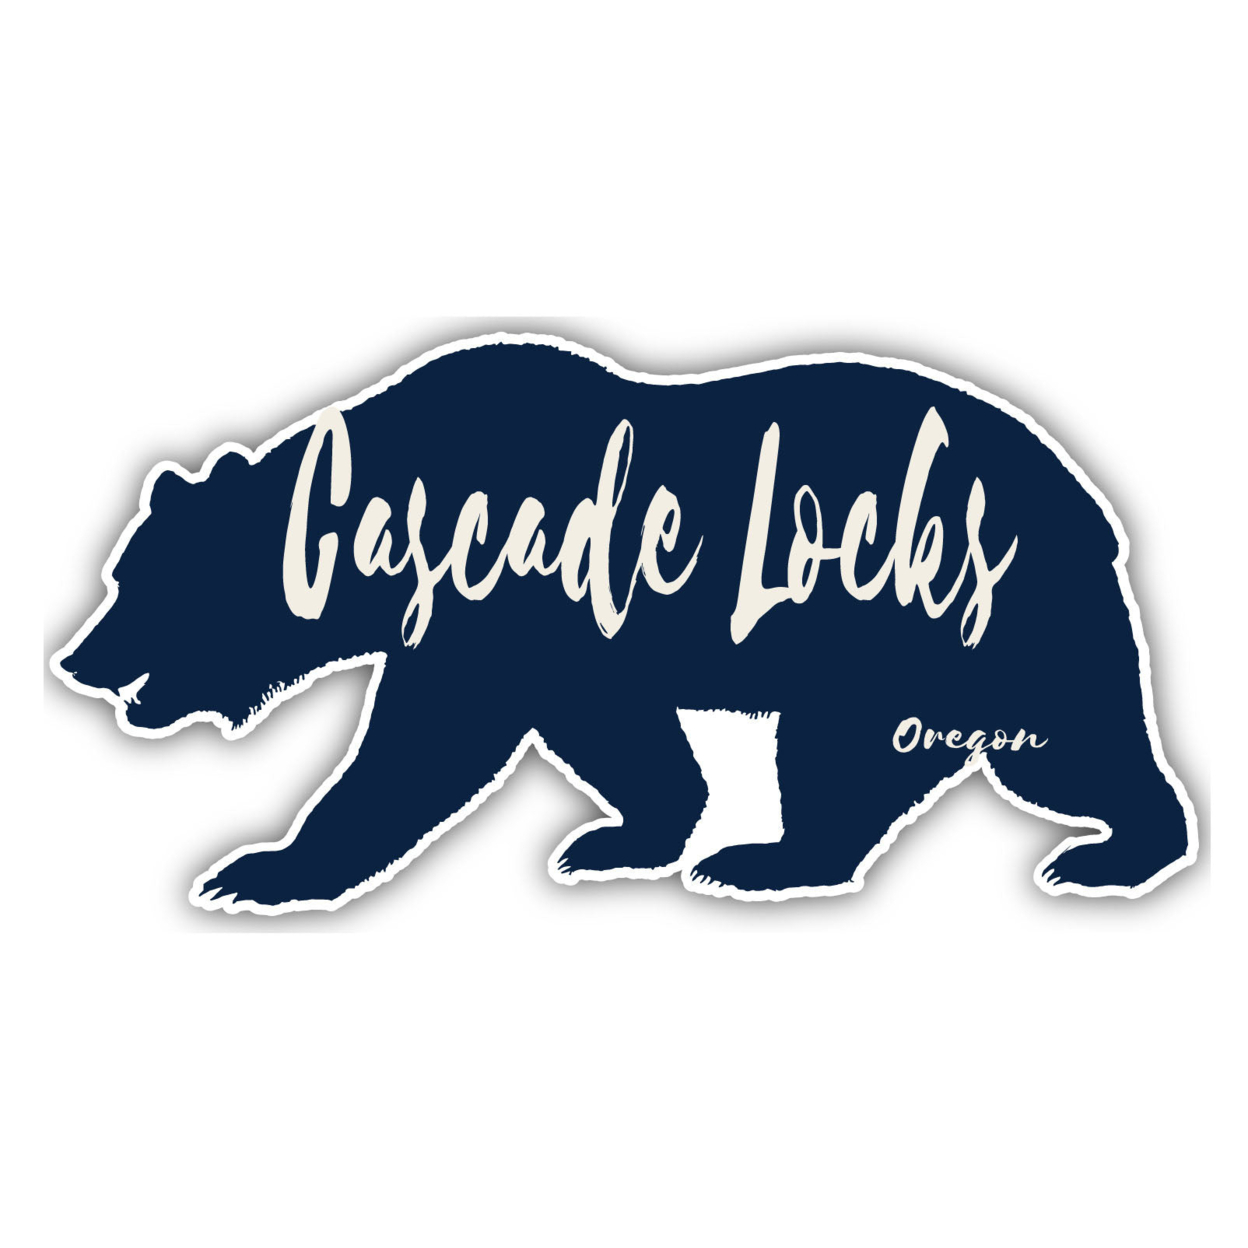 Cascade Locks Oregon Souvenir Decorative Stickers (Choose Theme And Size) - Single Unit, 4-Inch, Adventures Awaits